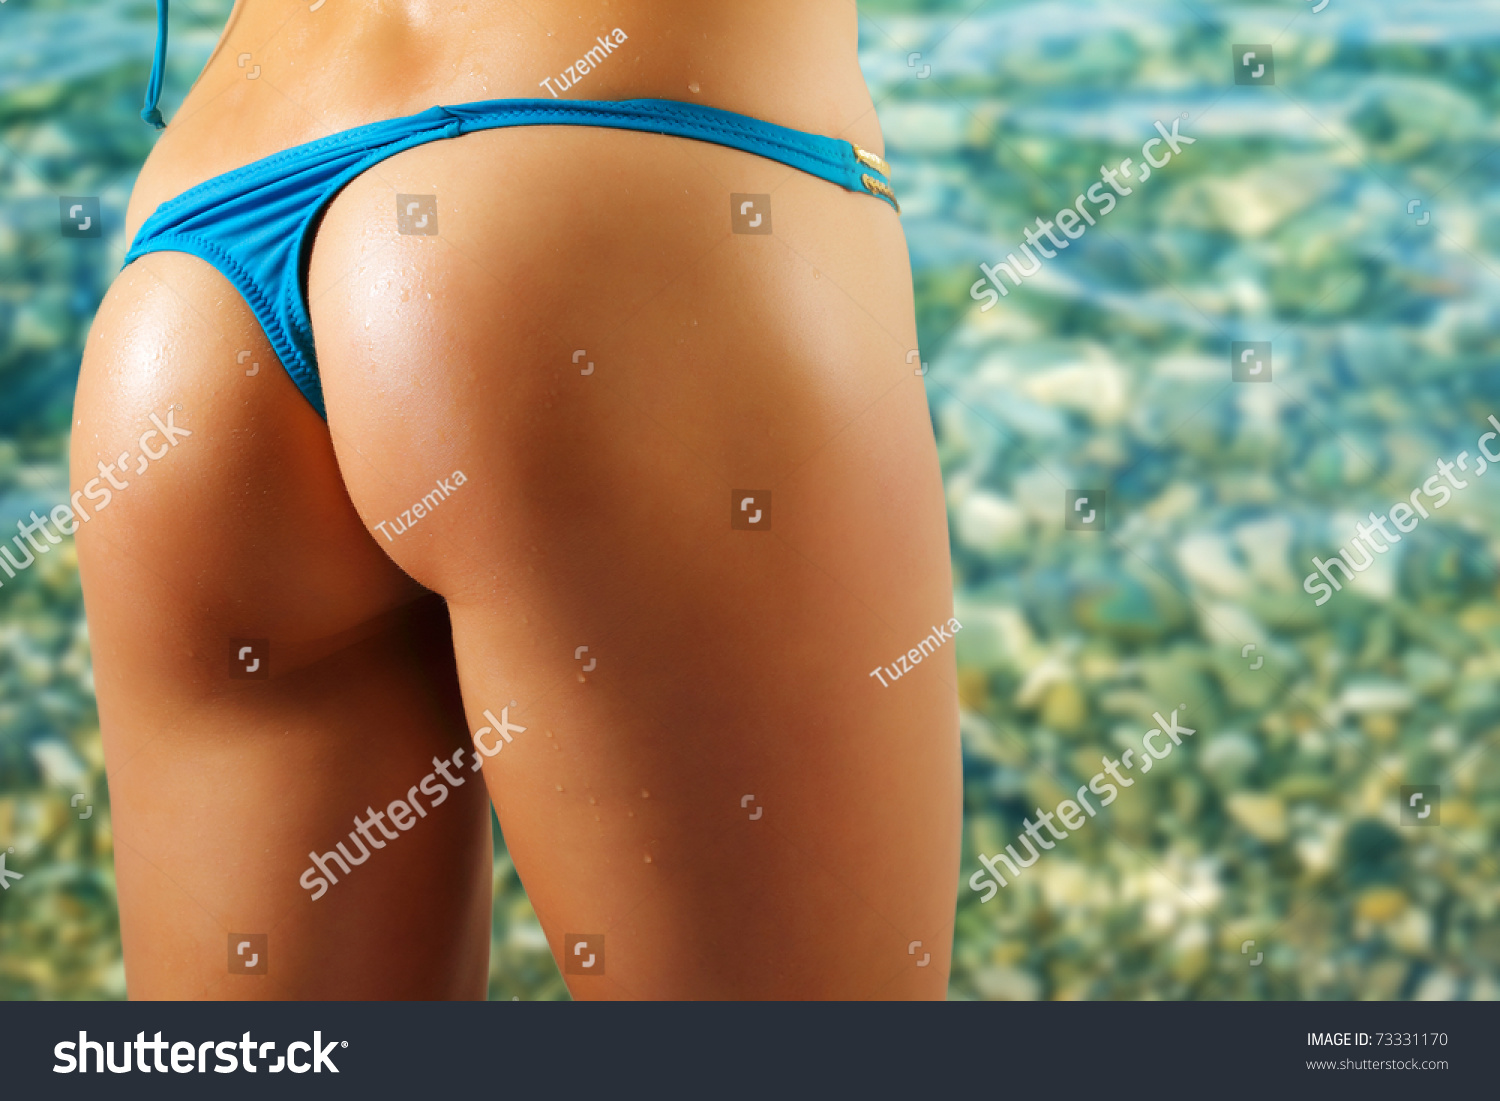 Sexy Woman Buttocks On Beach Stock Photo Shutterstock